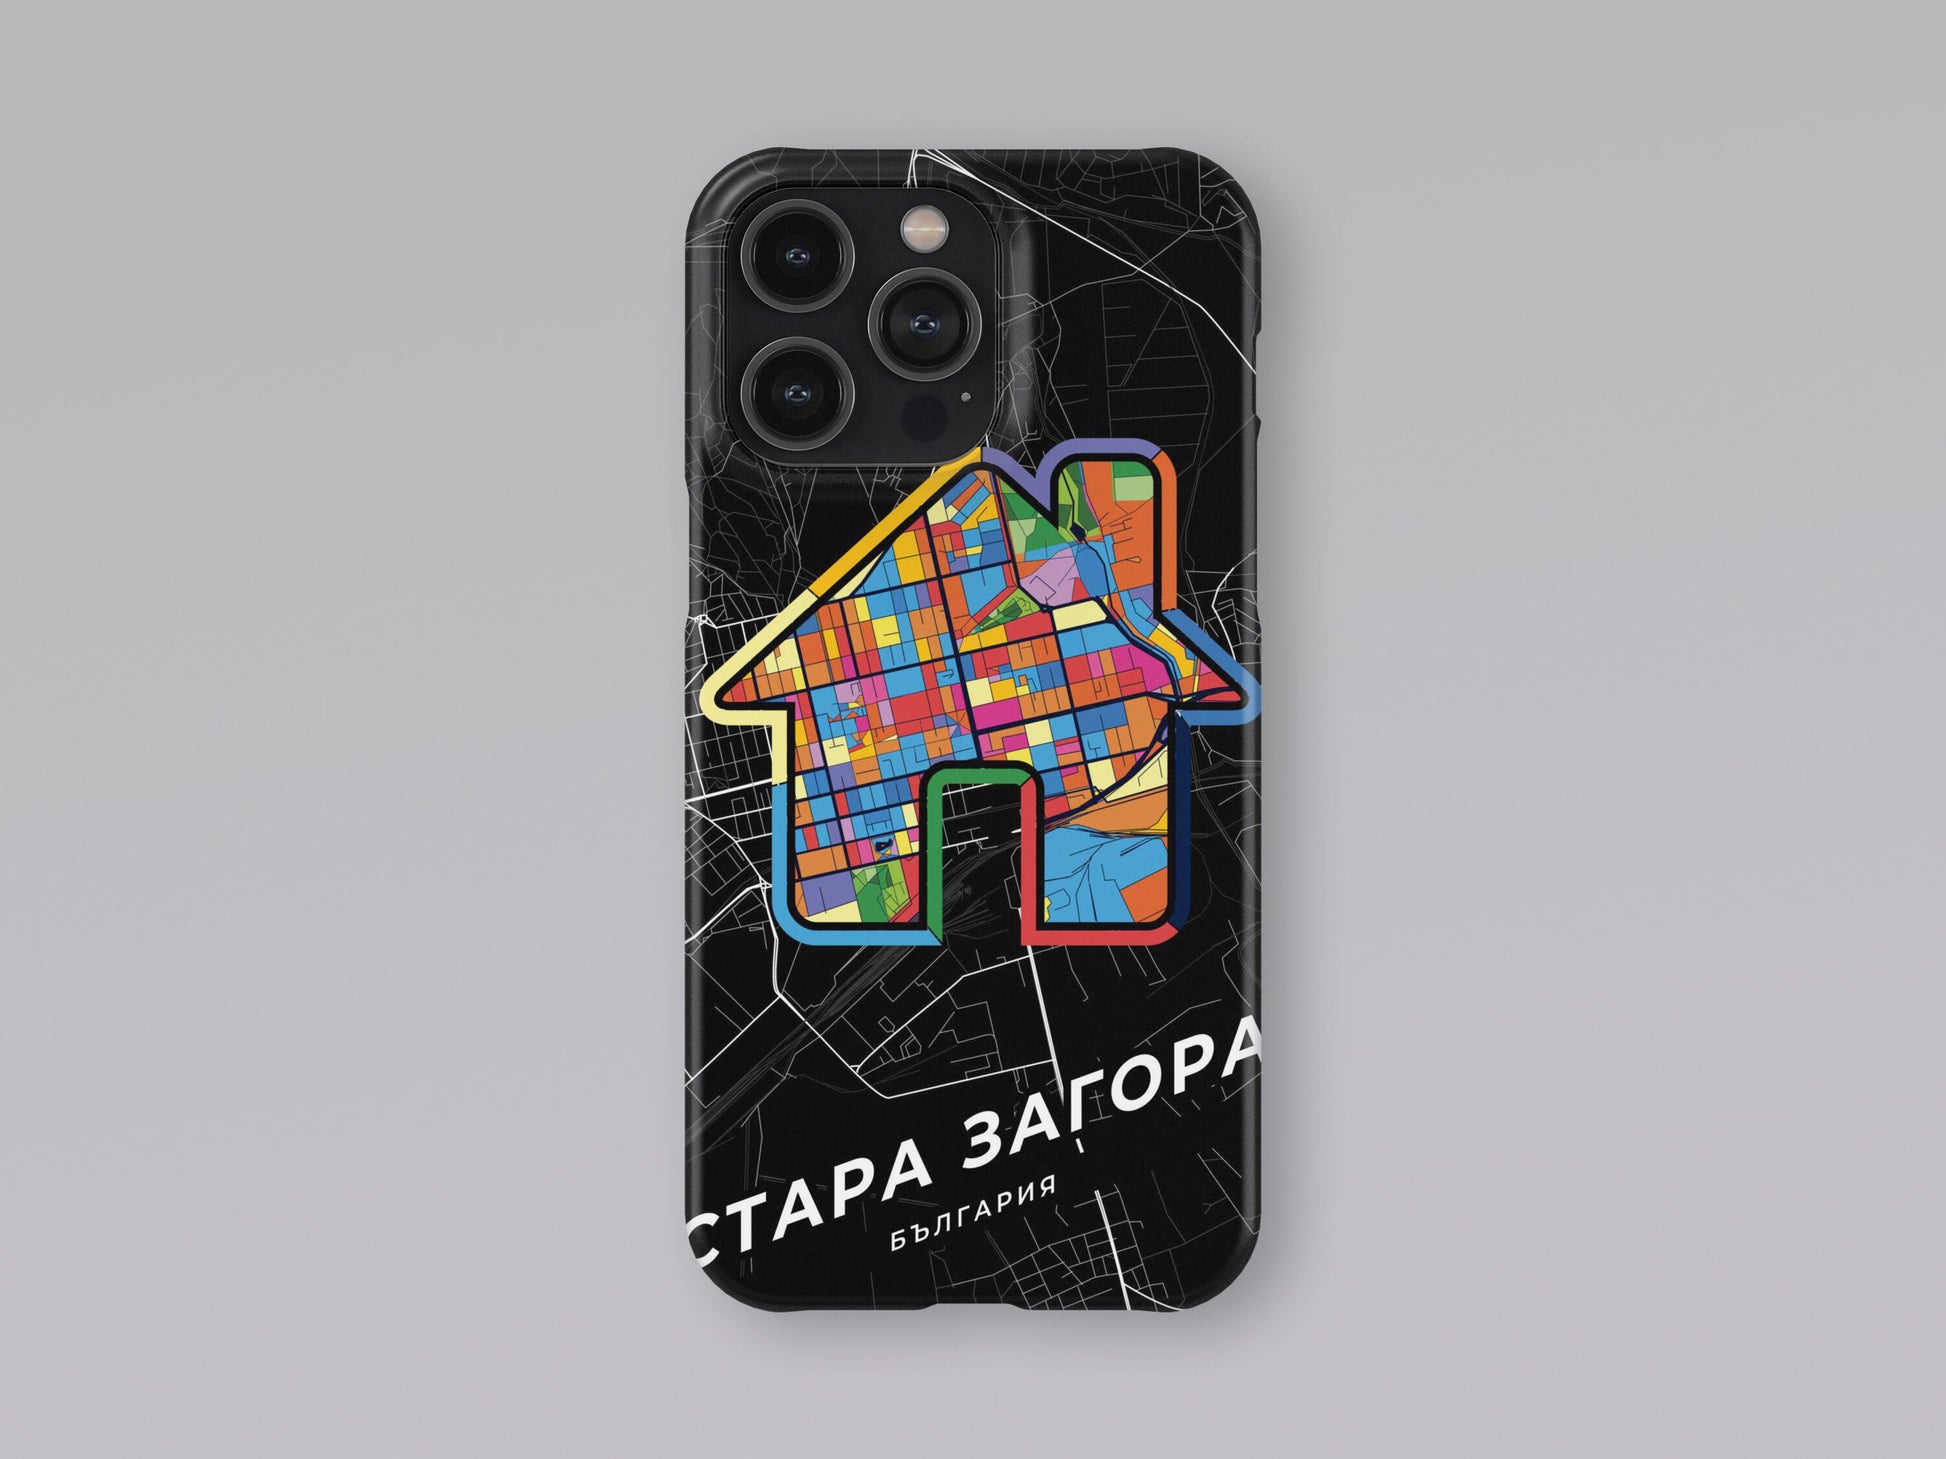 Стара Загора България slim phone case with colorful icon. Birthday, wedding or housewarming gift. Couple match cases. 3